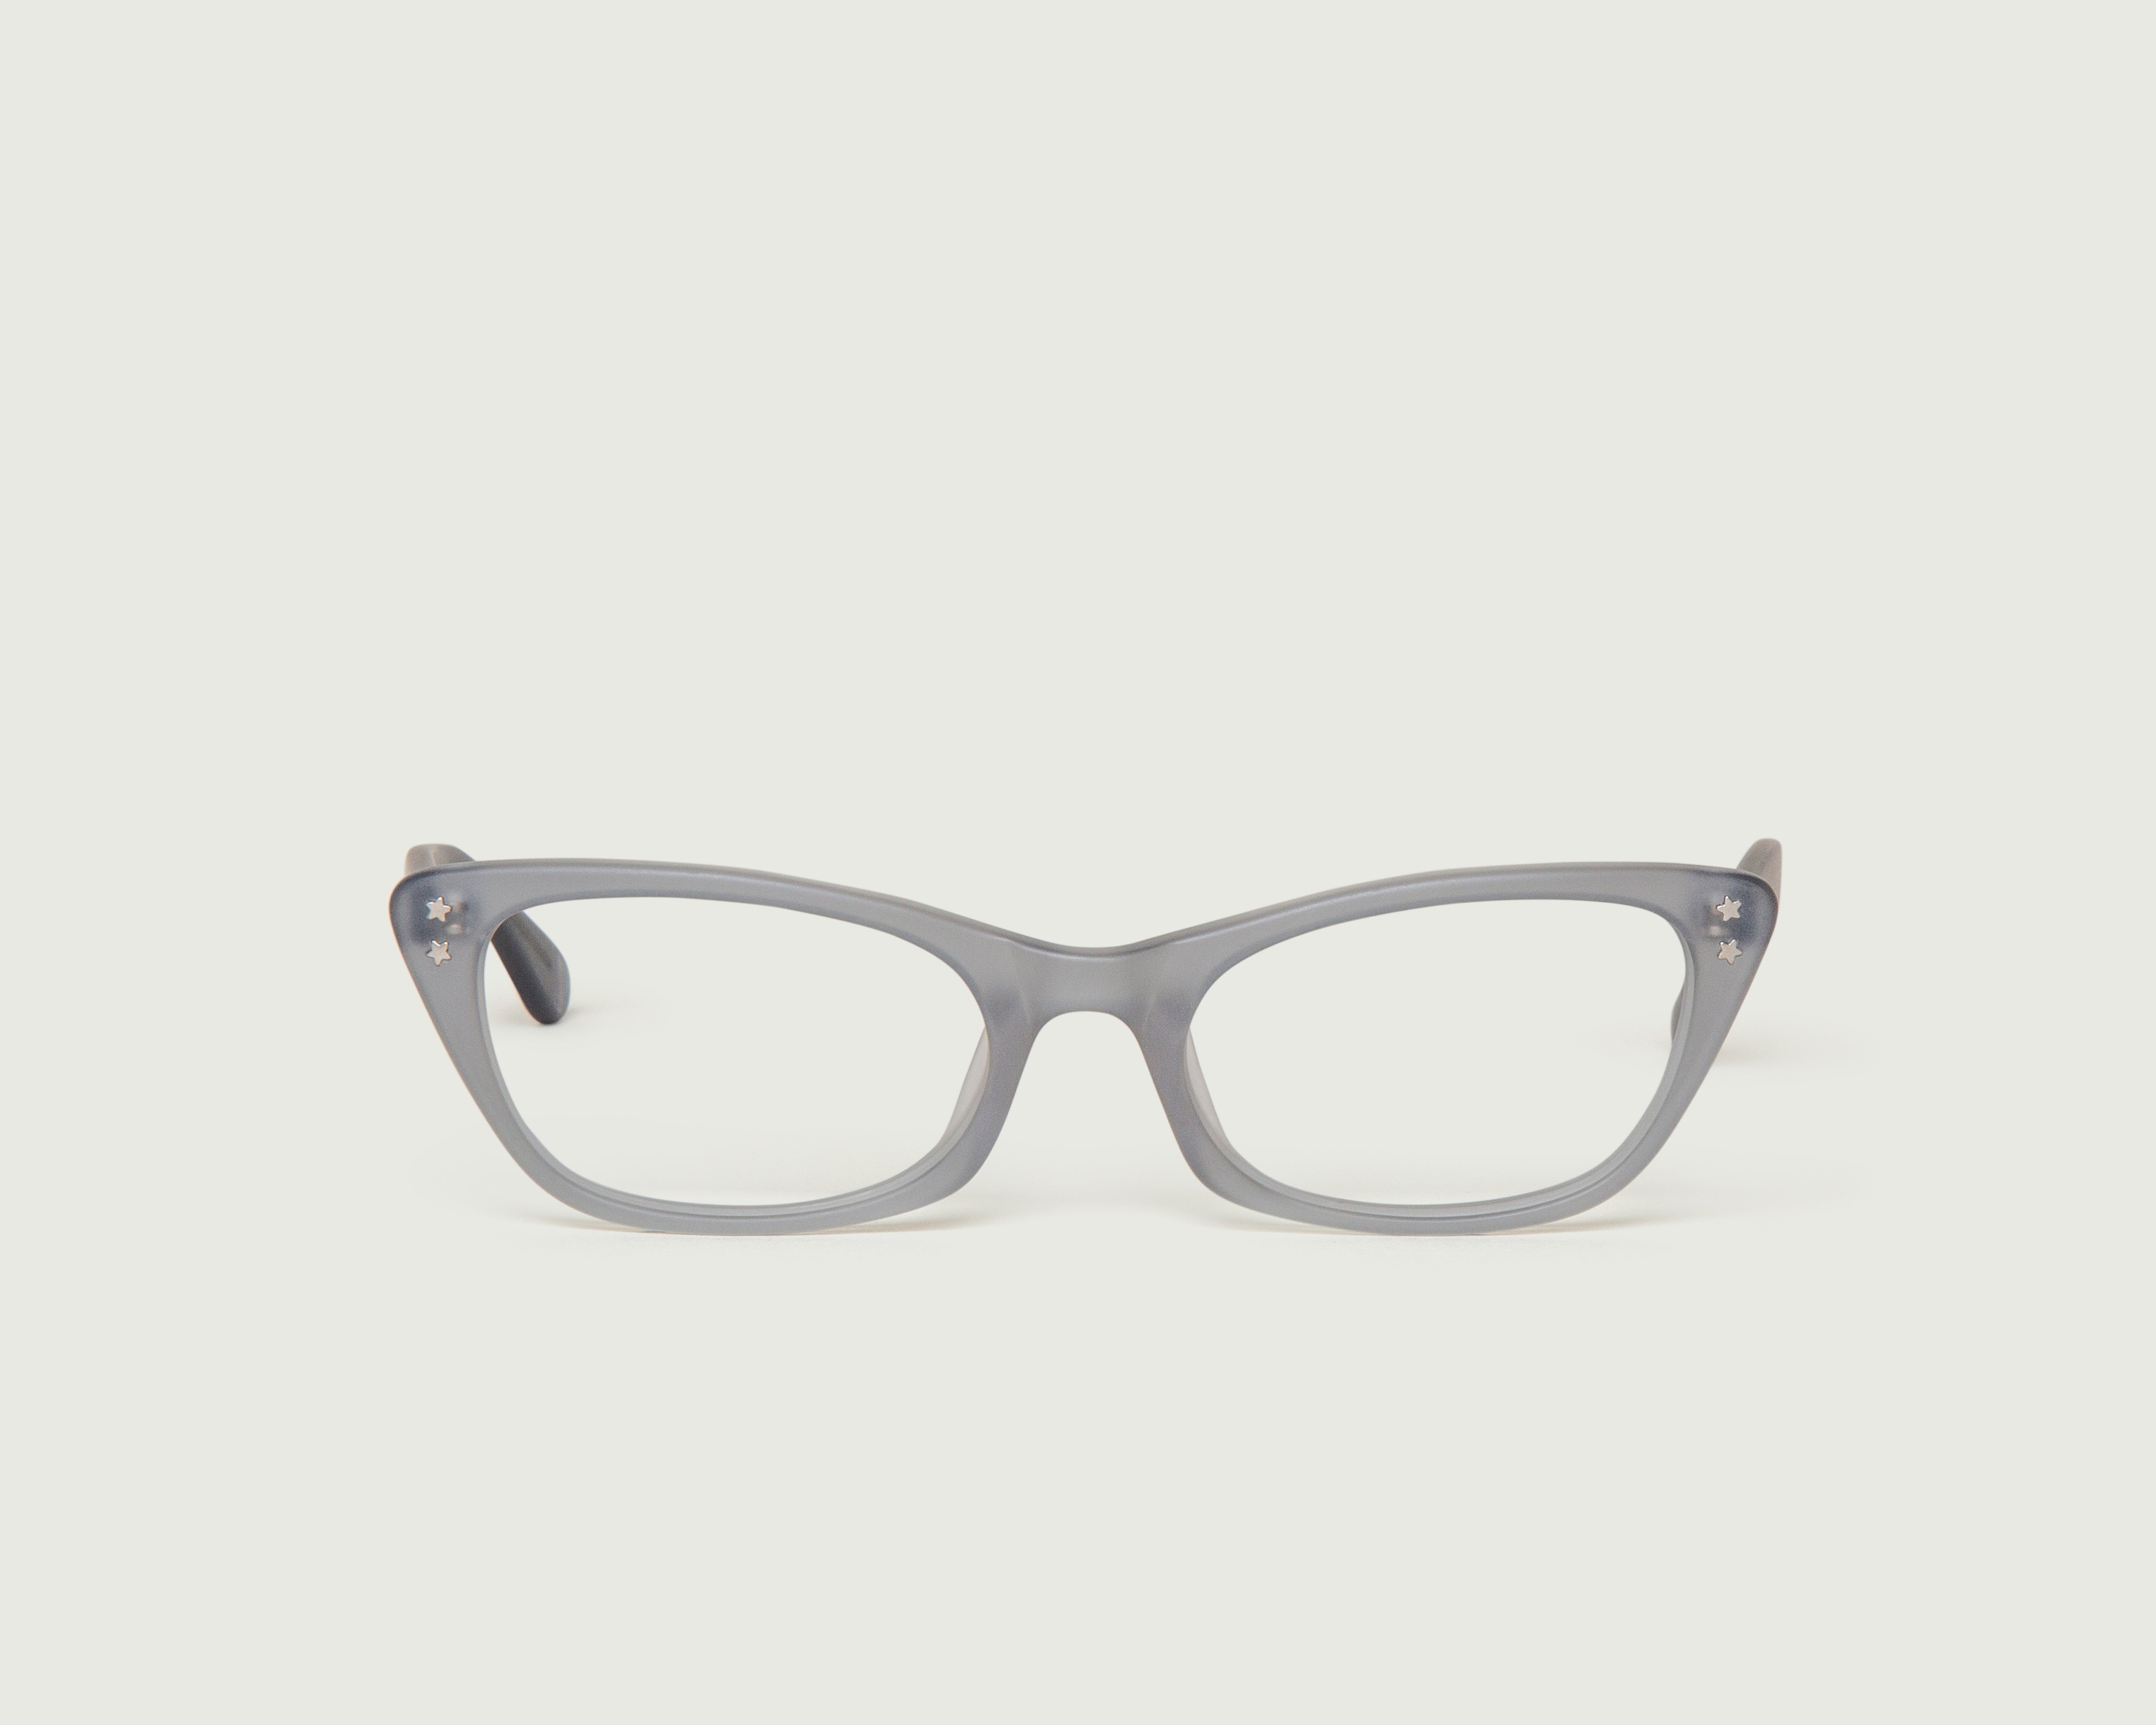 Stone::Venice Eyeglasses cat eye gray acetate front